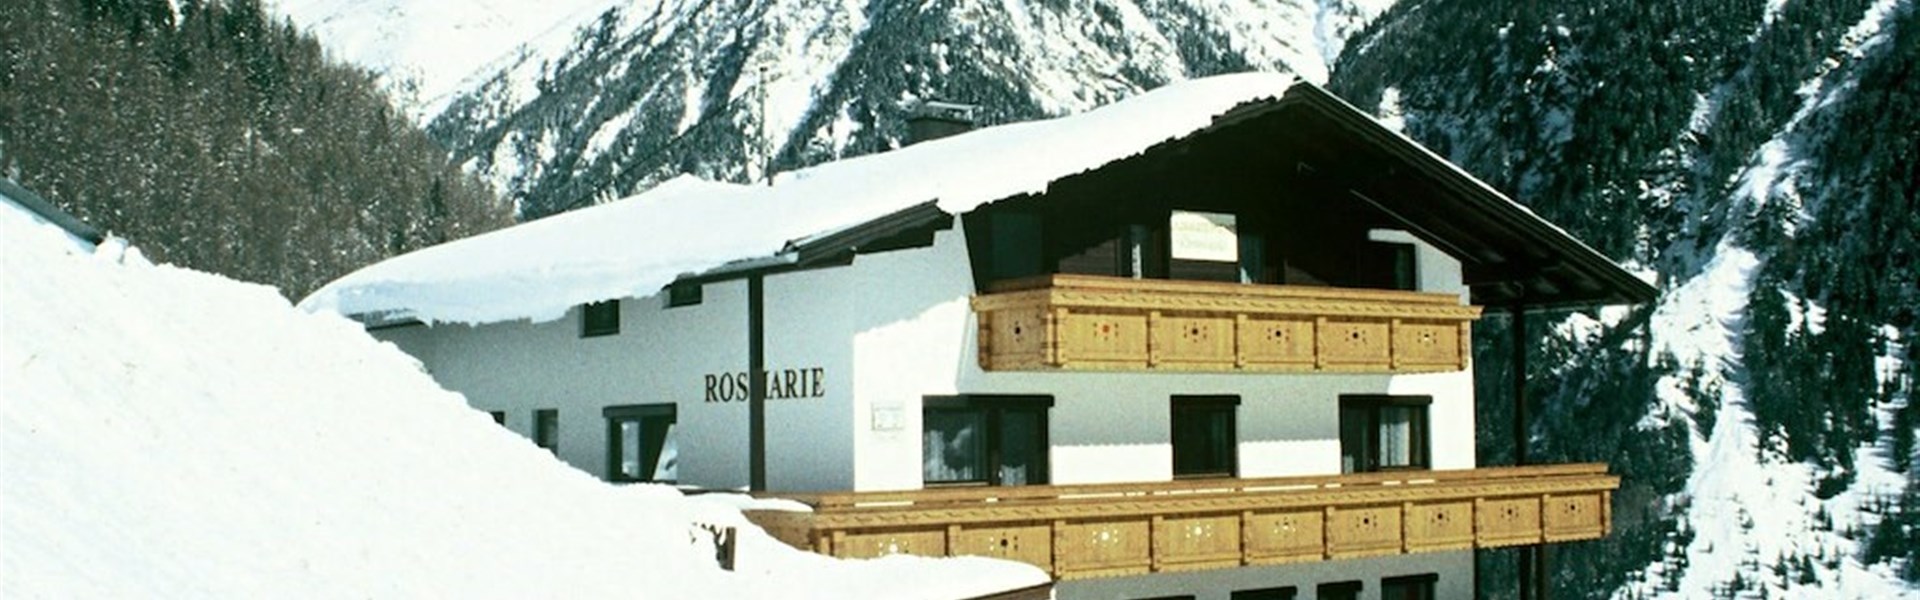 Marco Polo - Apartmány Rosmarie (W) - 